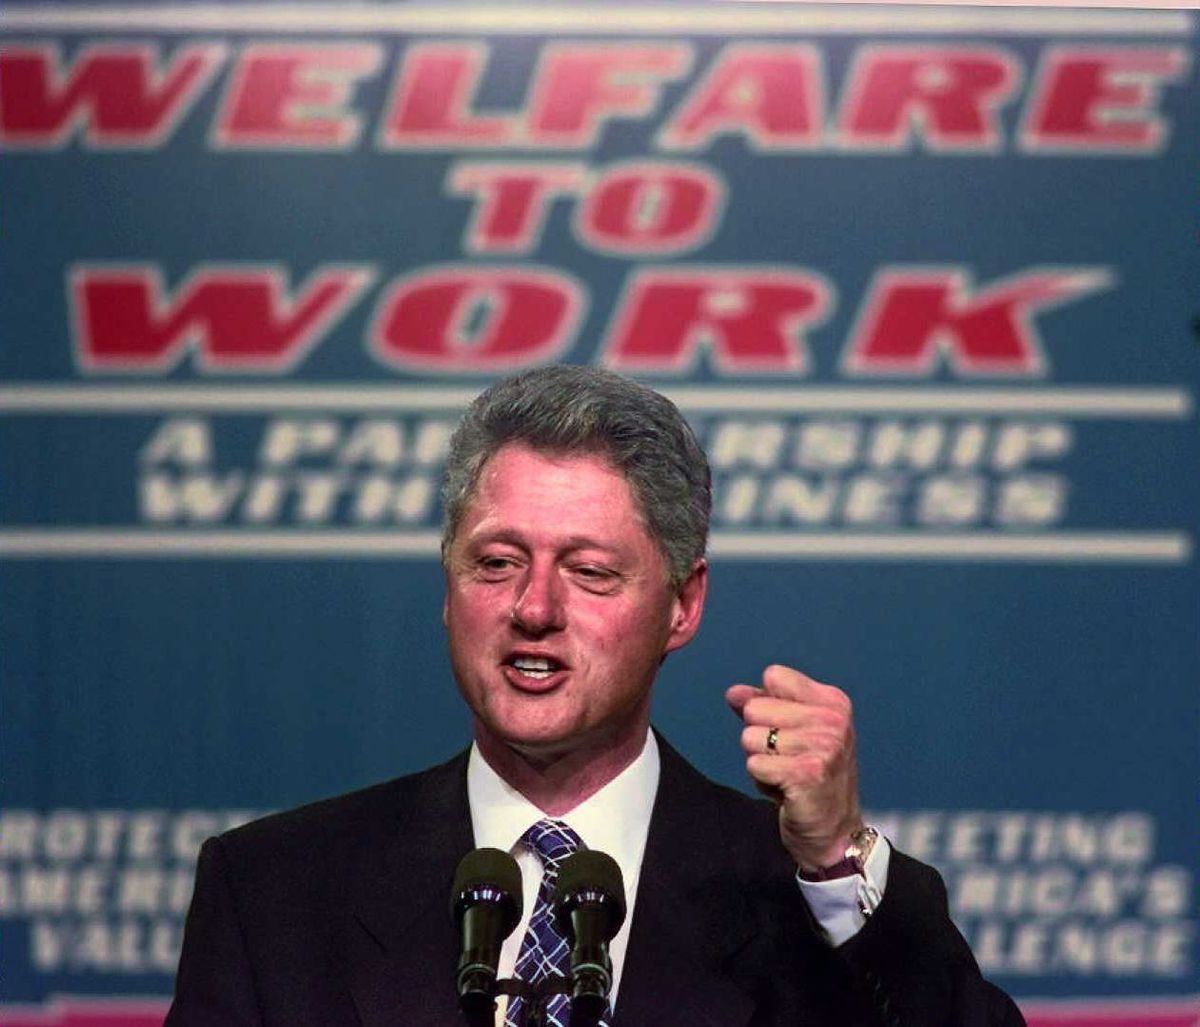 Welfare reform, Clinton, 1996